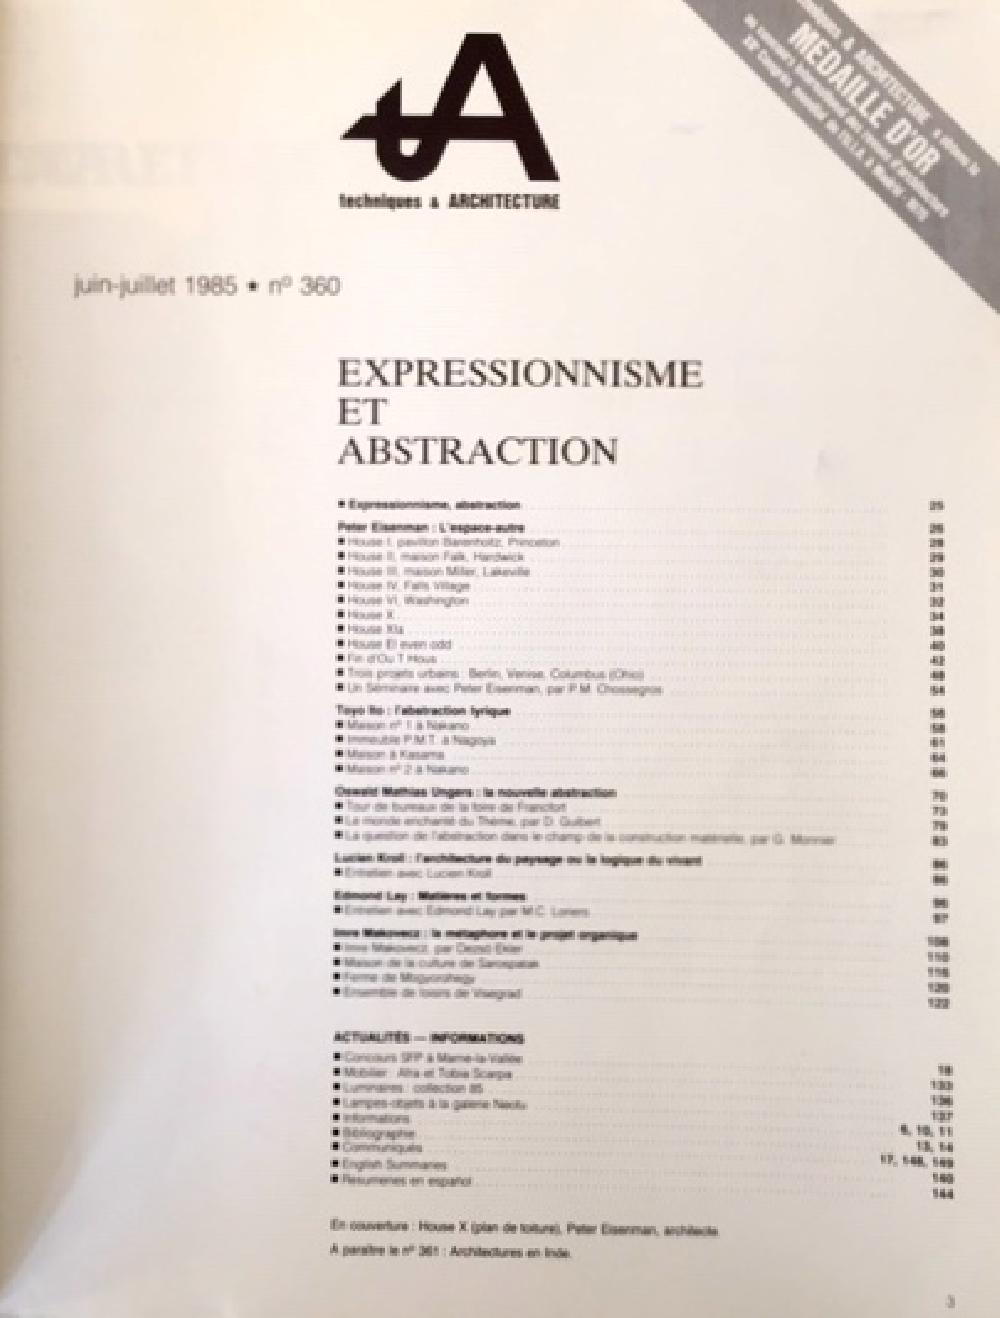 Techniques & Architecture n°360 - Expressionnisme et abstraction